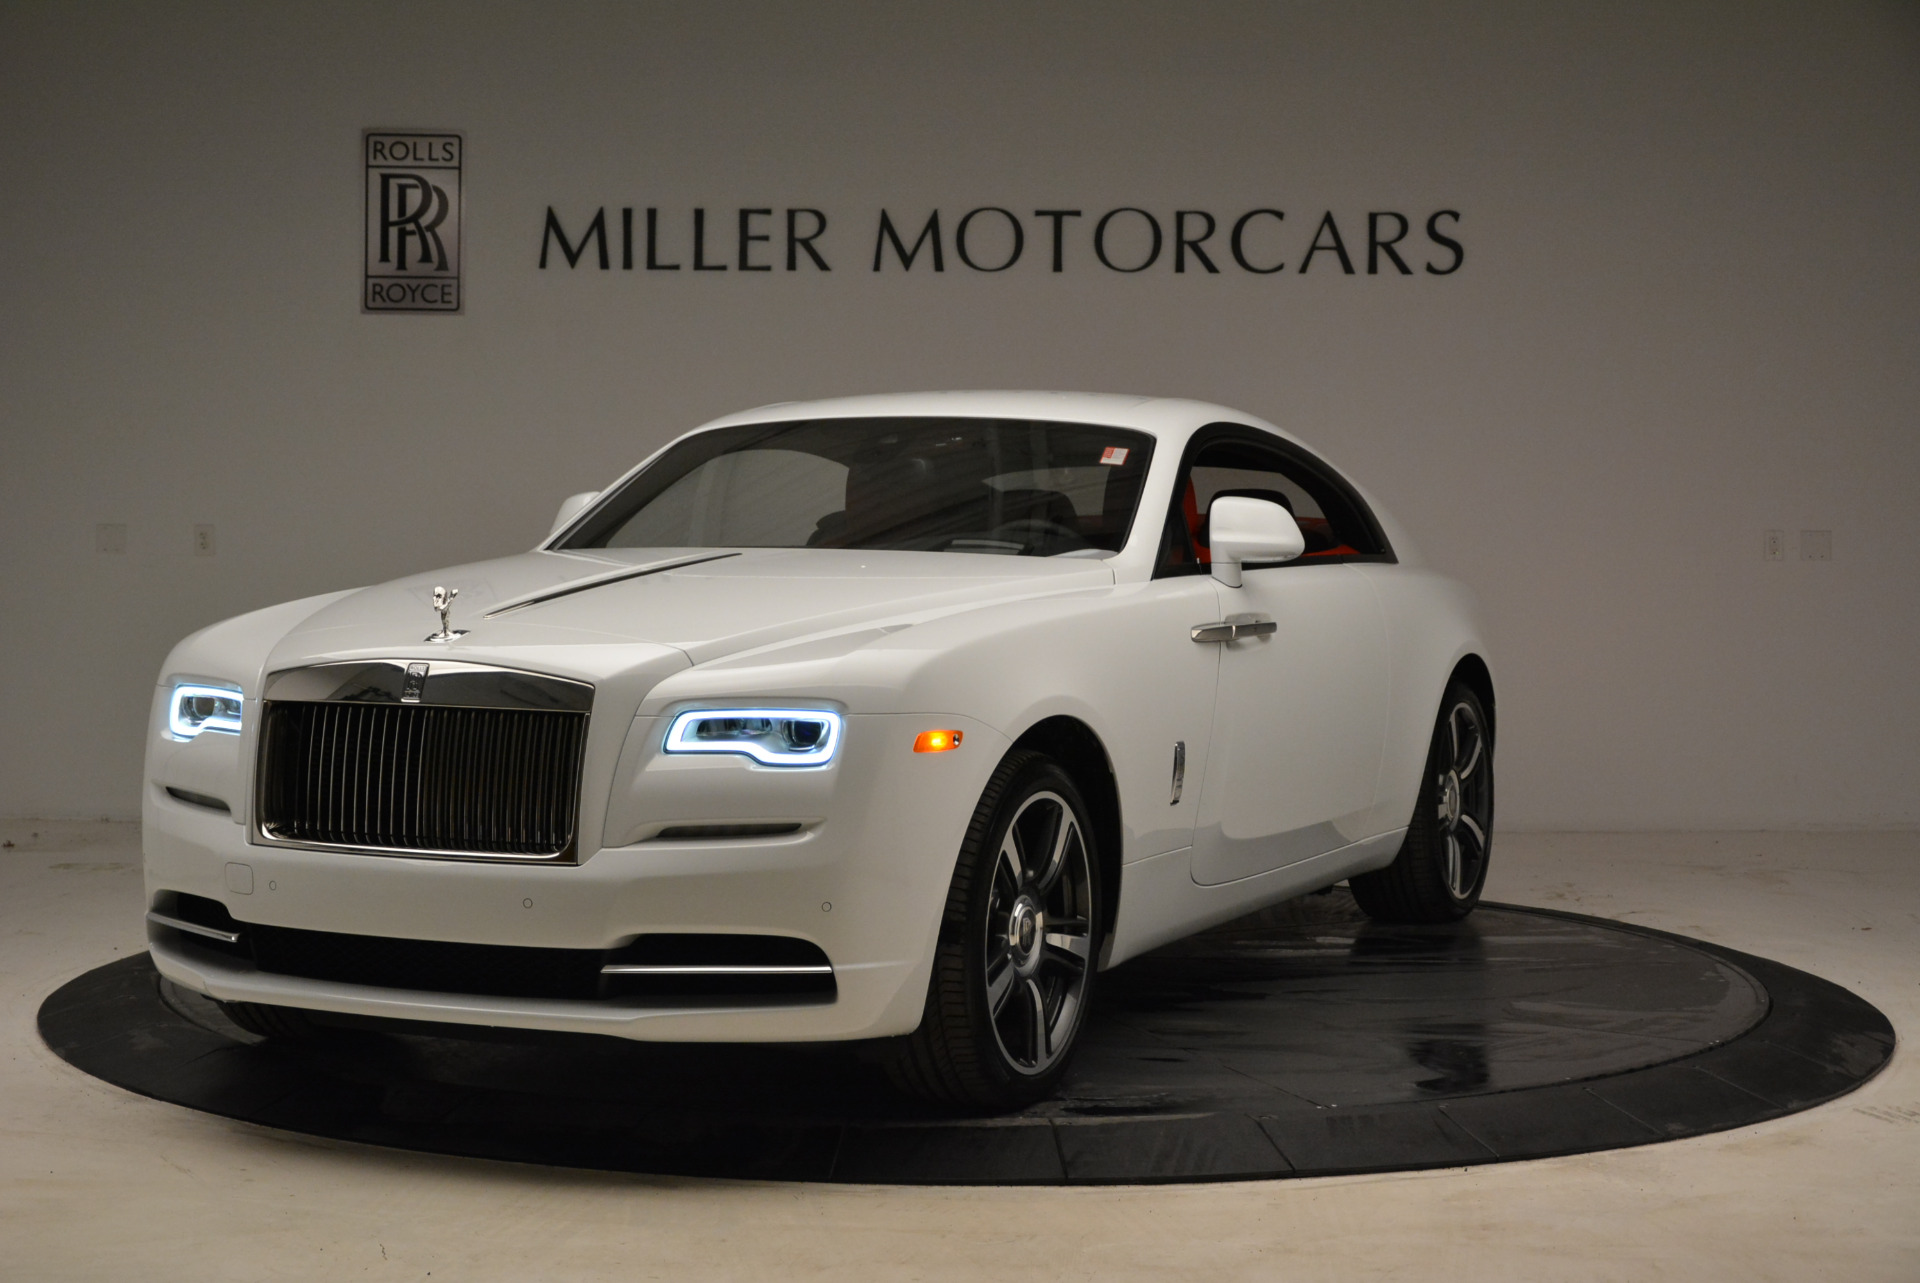 New 2018 Rolls Royce Wraith For Sale Miller Motorcars